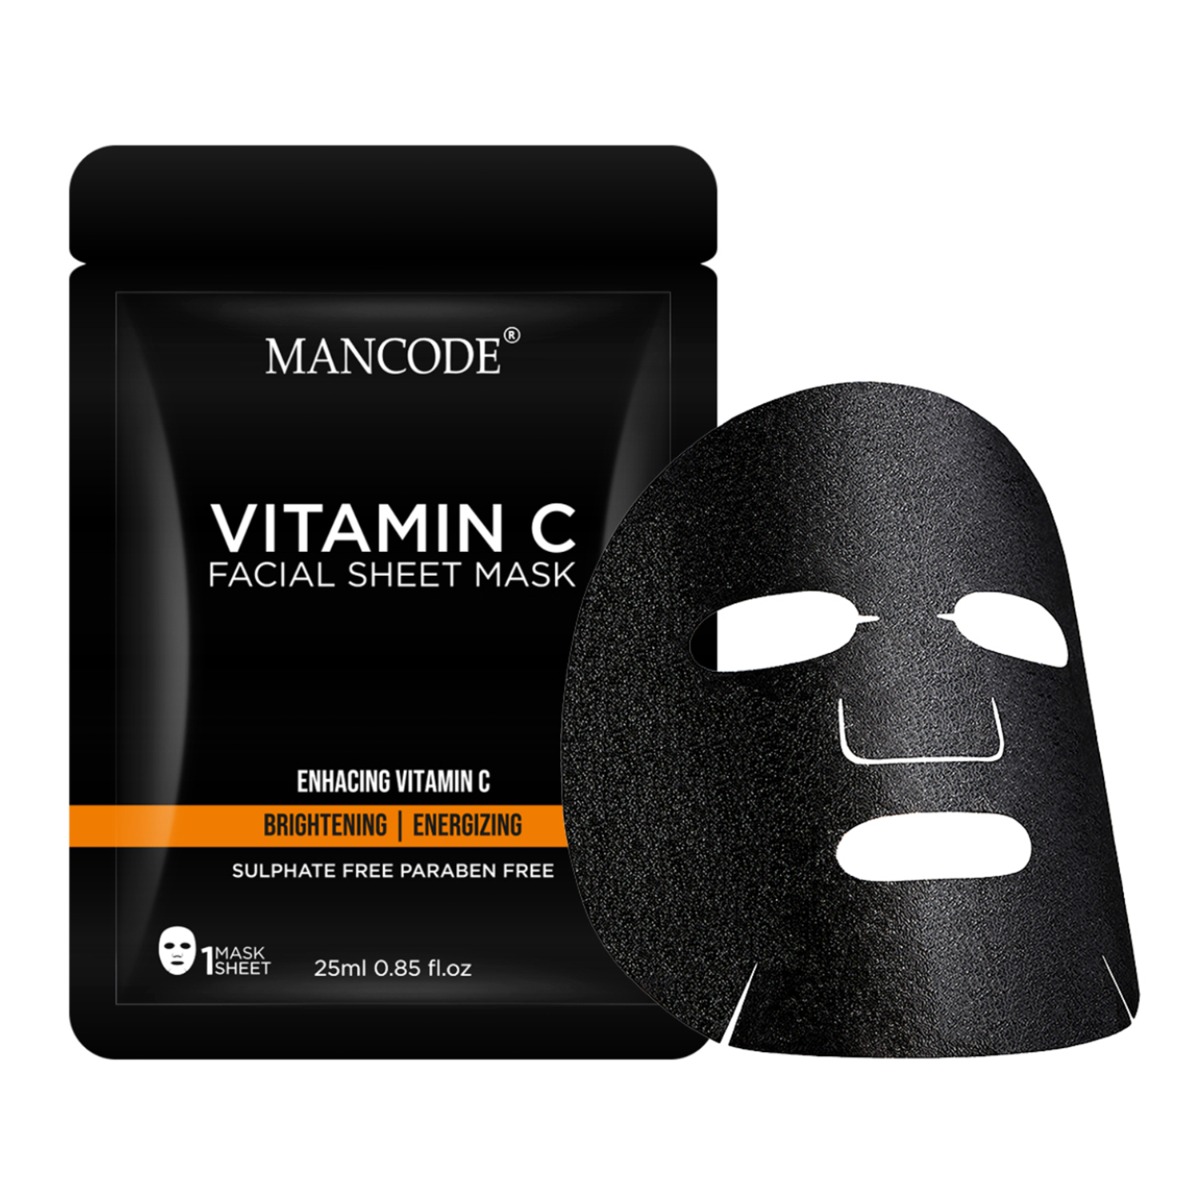 Mancode Vitamin C Brightening & Energizing Facial Sheet Mask, 25ml